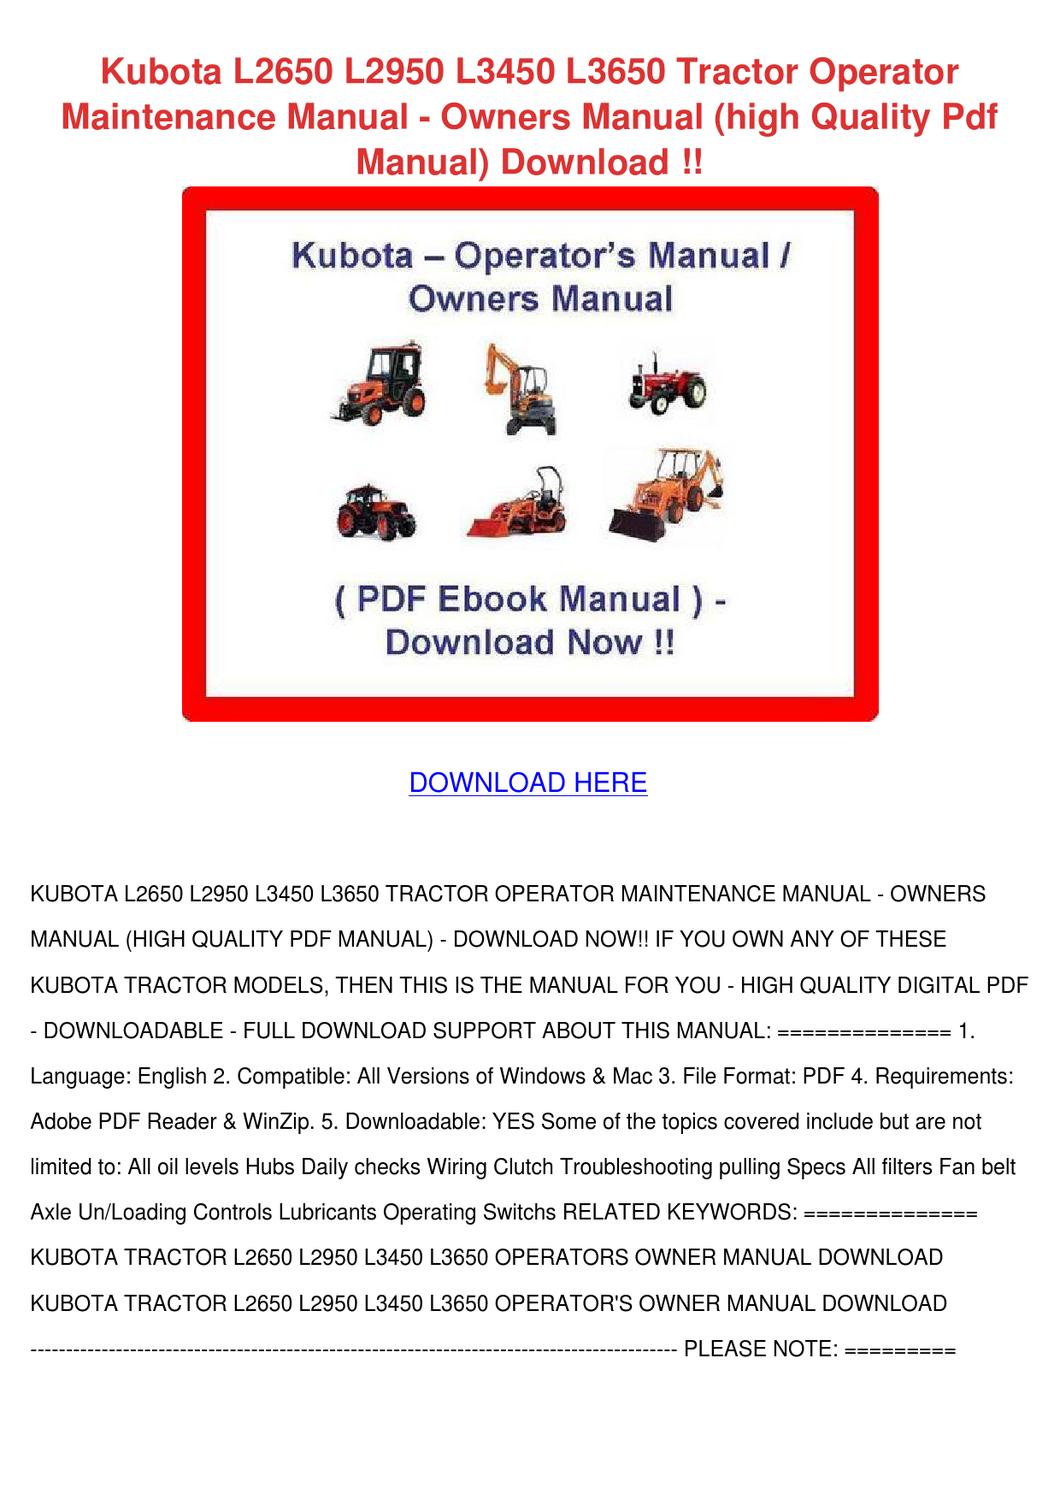 Kubota l2800 parts manual